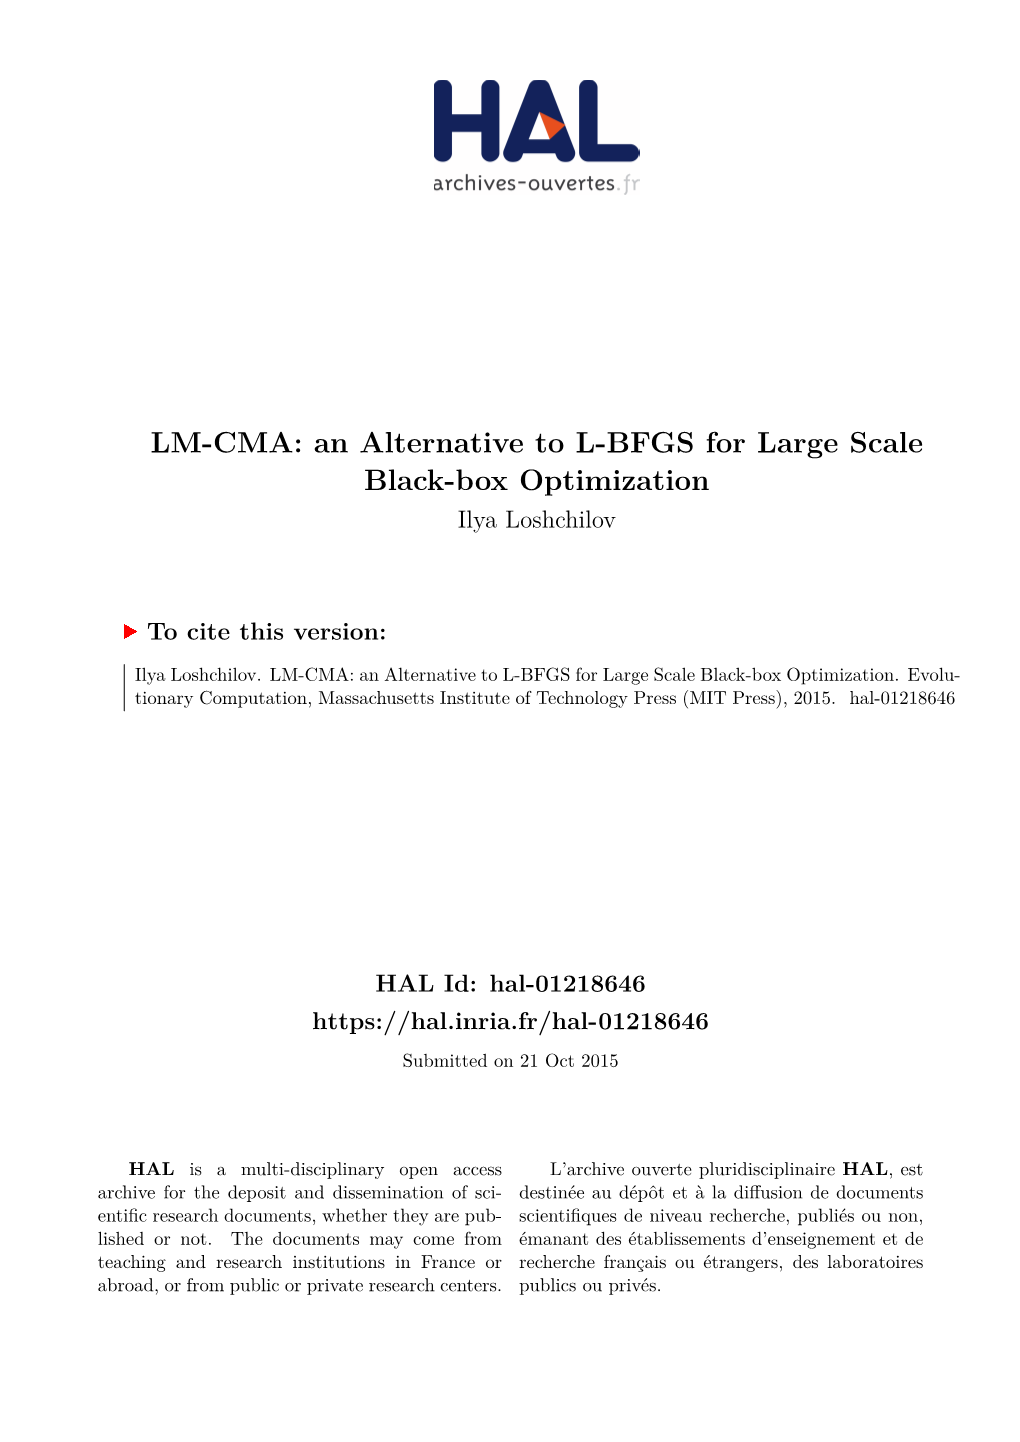 An Alternative to L-BFGS for Large Scale Black-Box Optimization Ilya Loshchilov